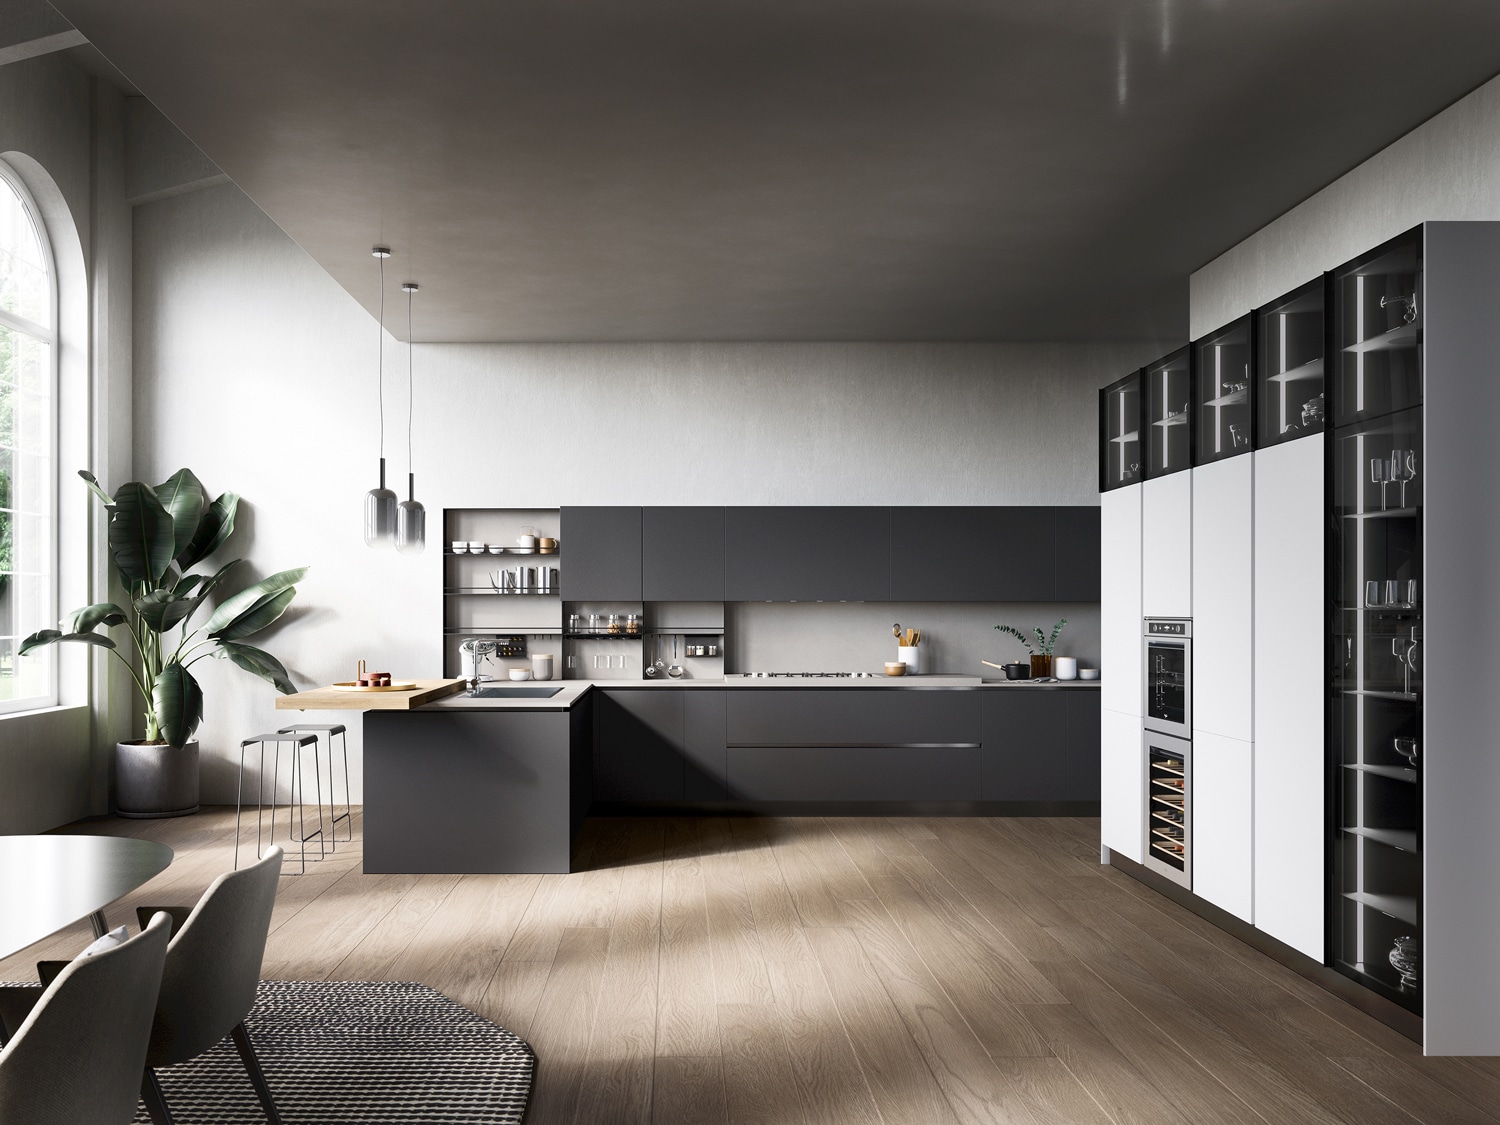 Kappa kitchen cabinetry design